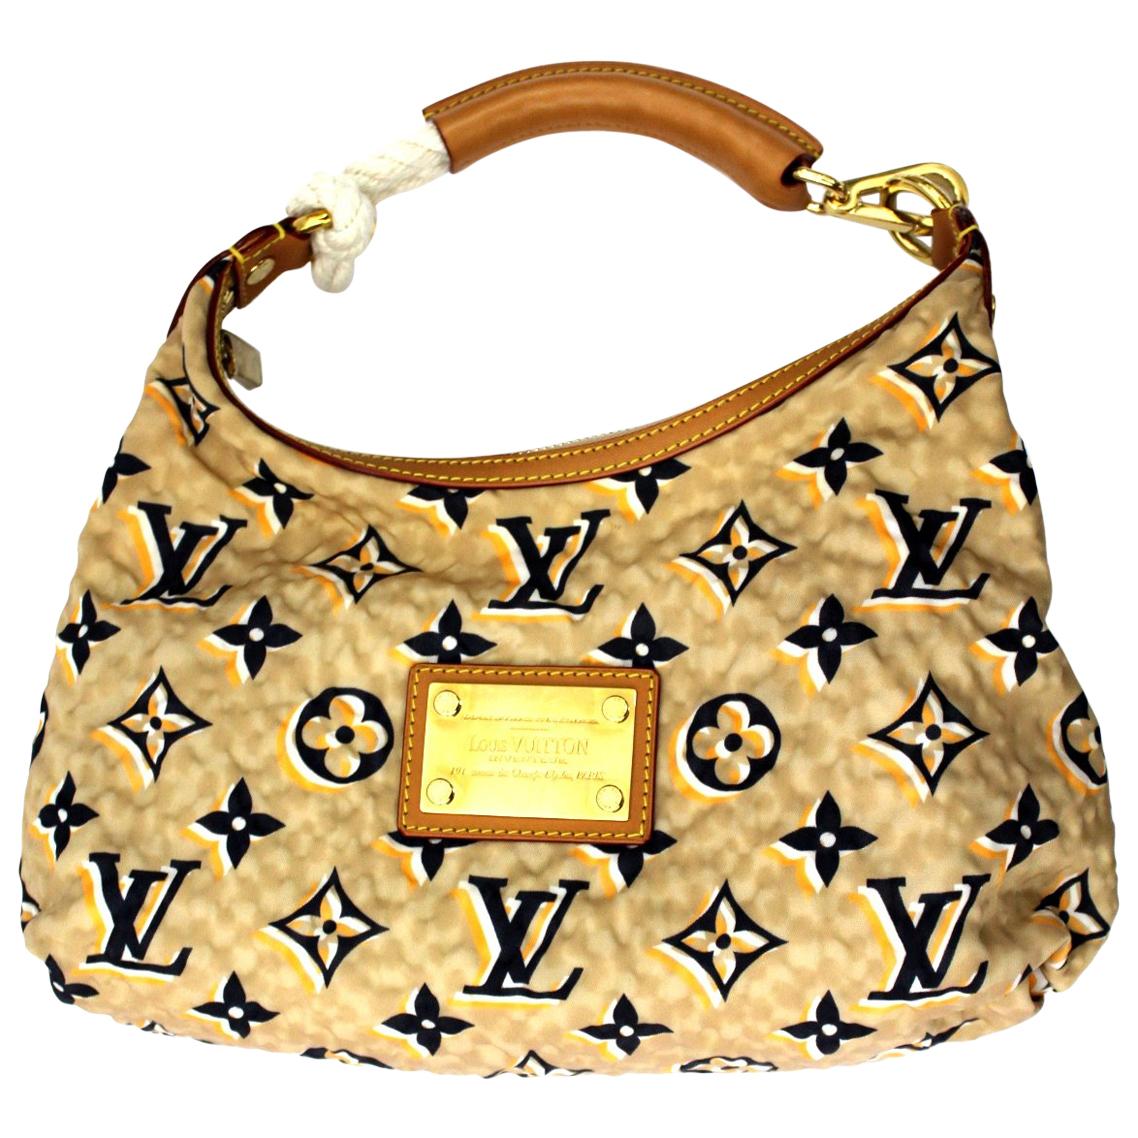 2009 Louis Vuitton Limited Edition Navy Nylon PM Bag